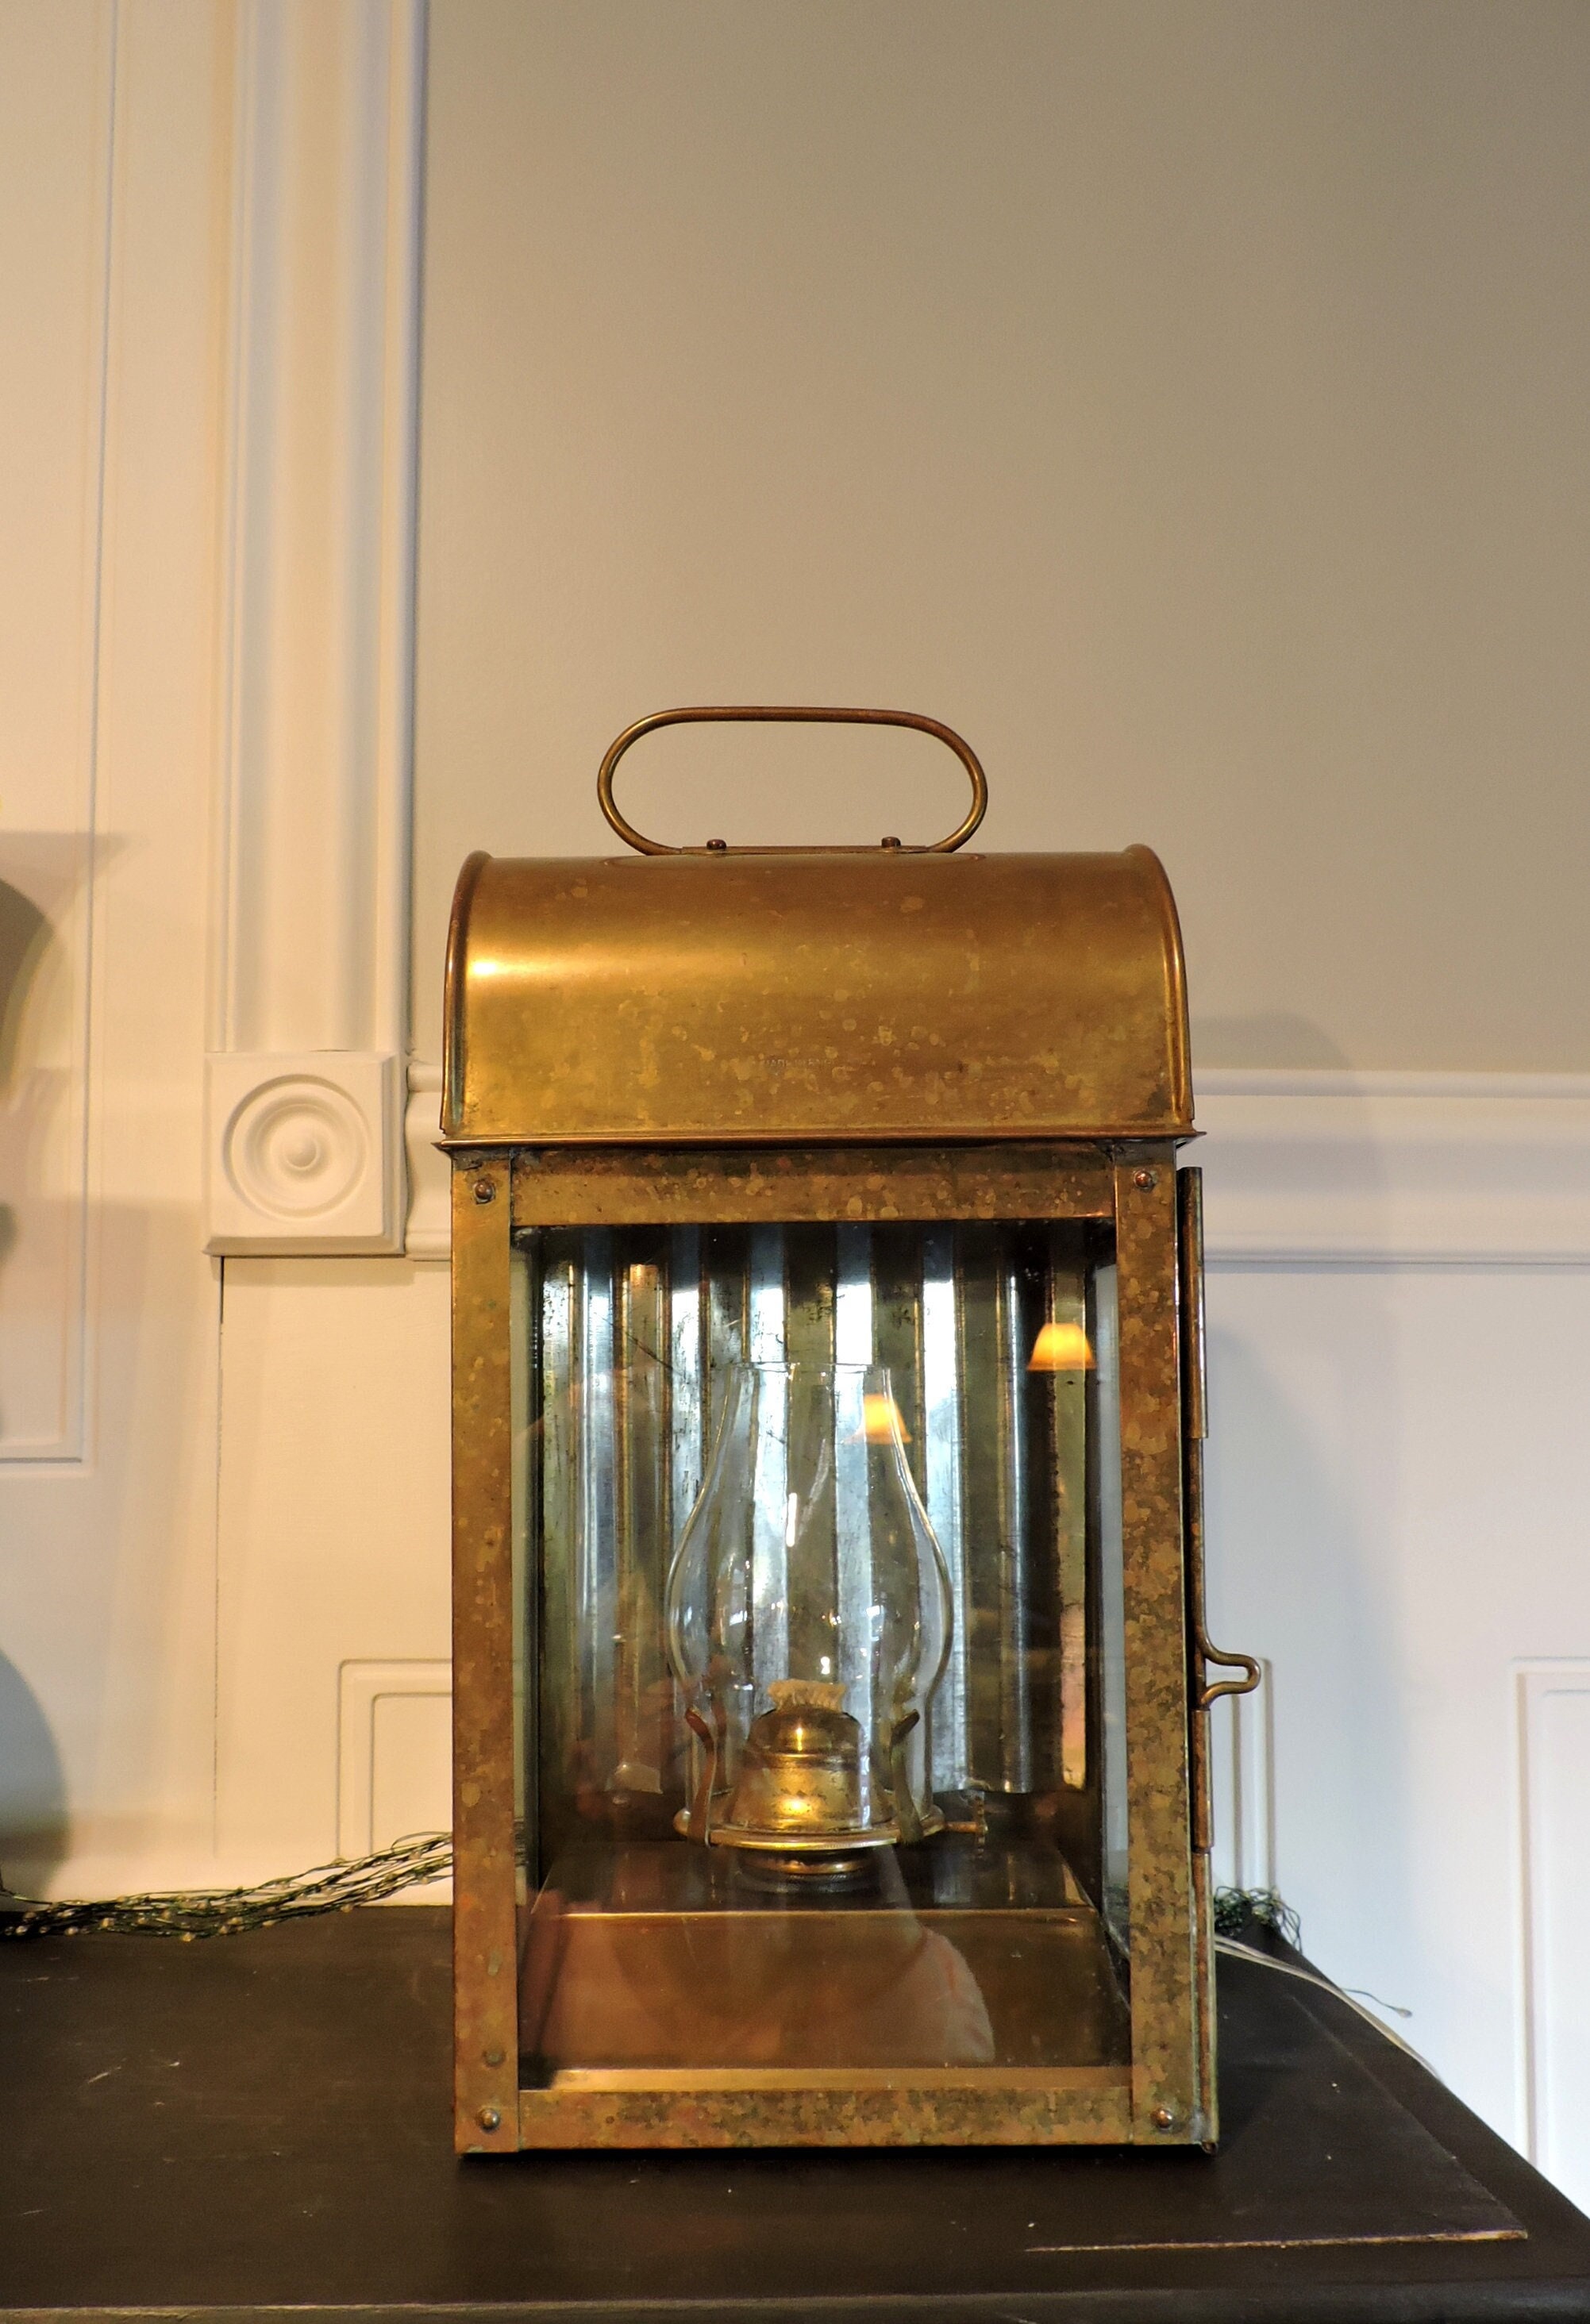 14 Brass Anchor Oil Lamp w/ Clear Fresnel Lens - Ship Lantern